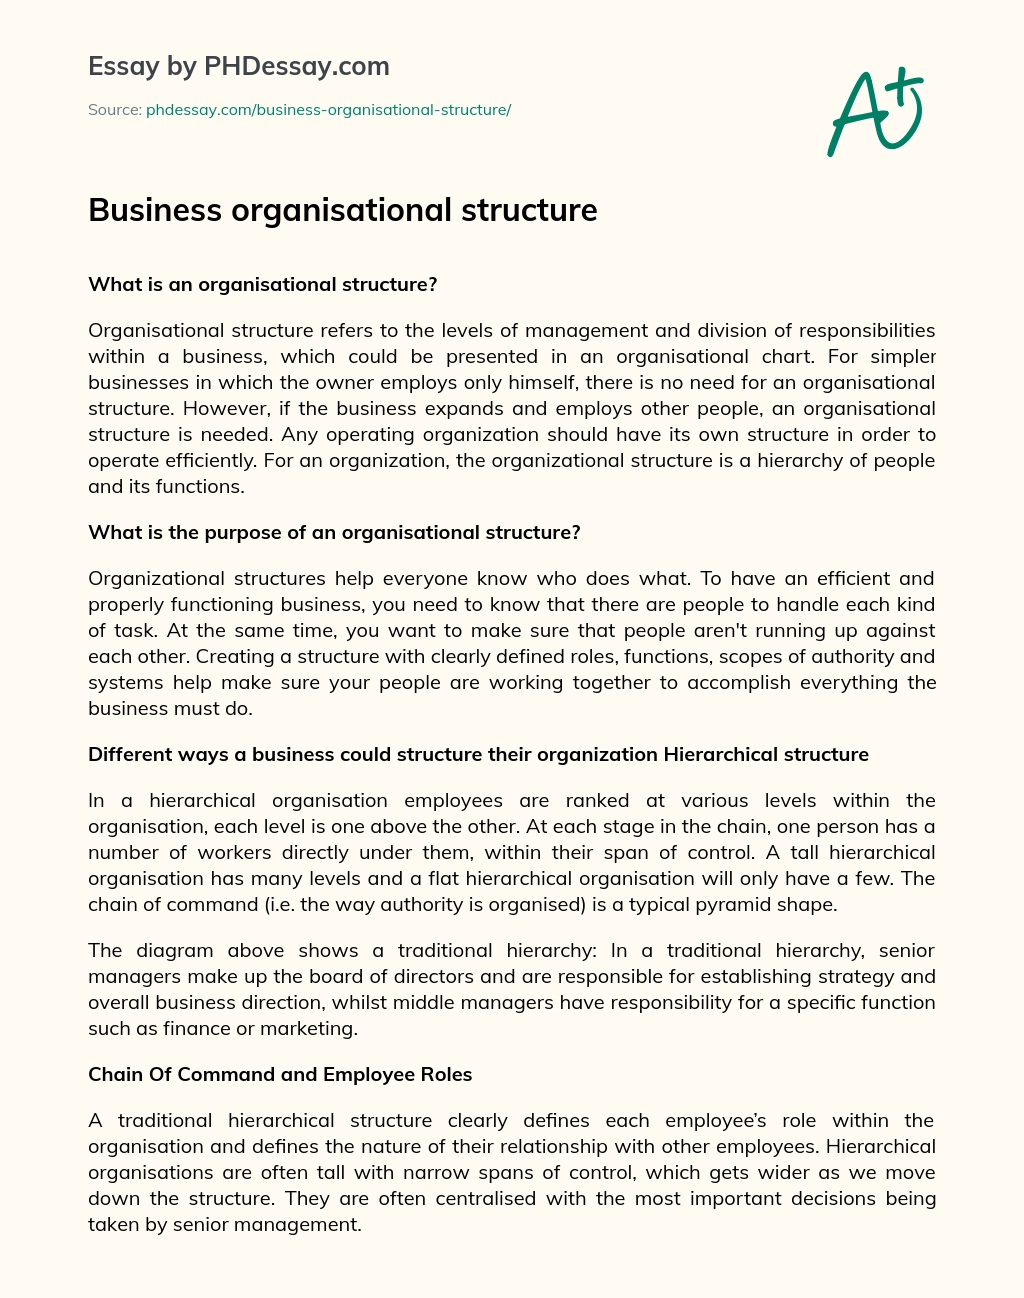 Business organisational structure essay